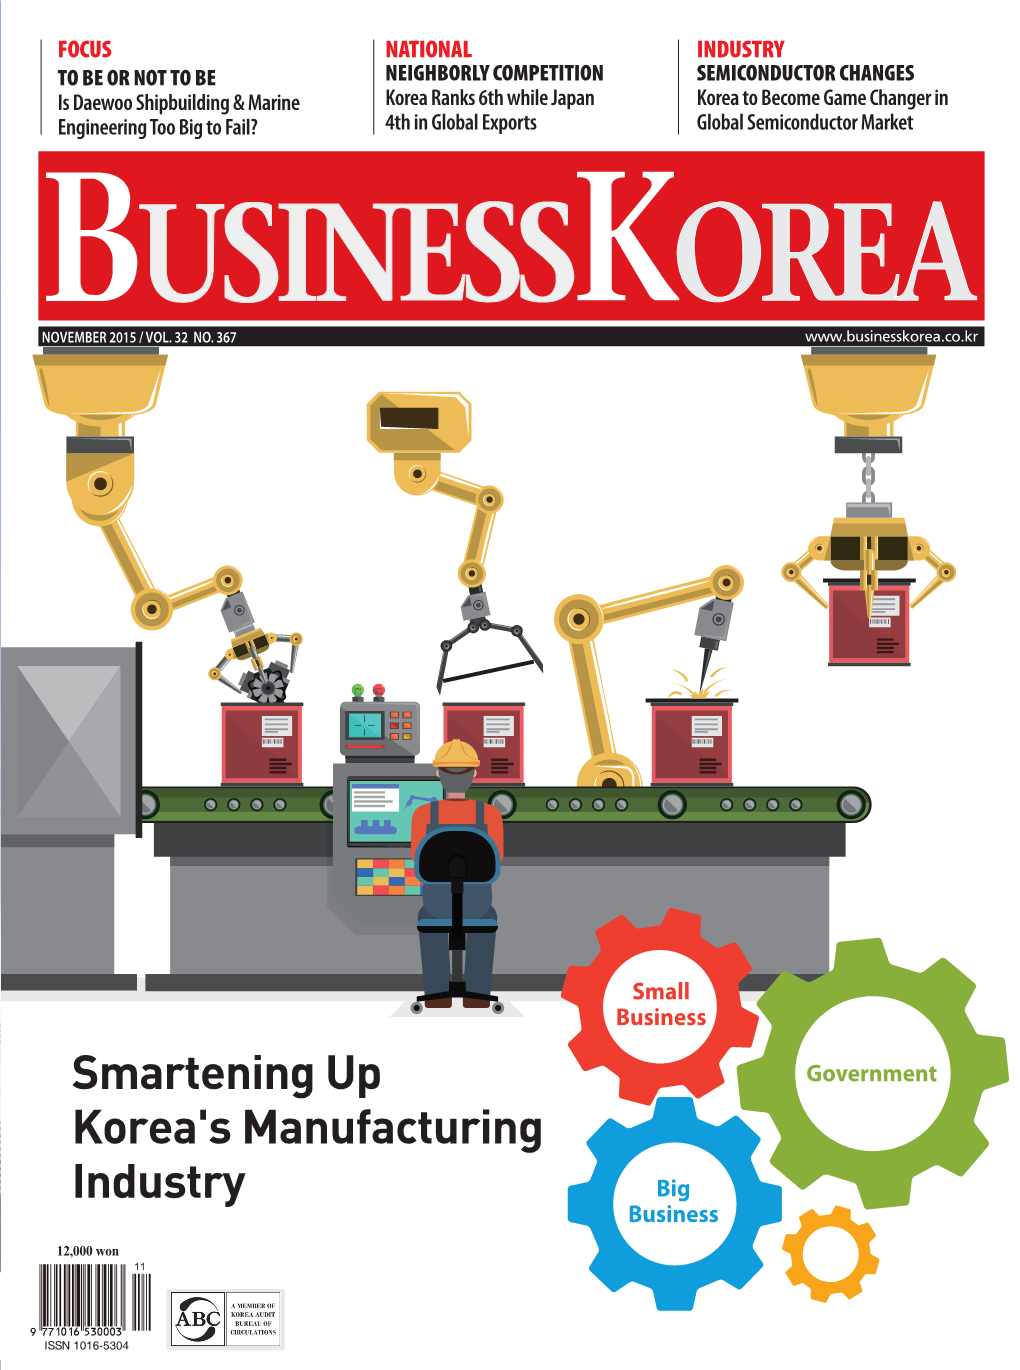 Smartening up Korea's Manufacturing Industry